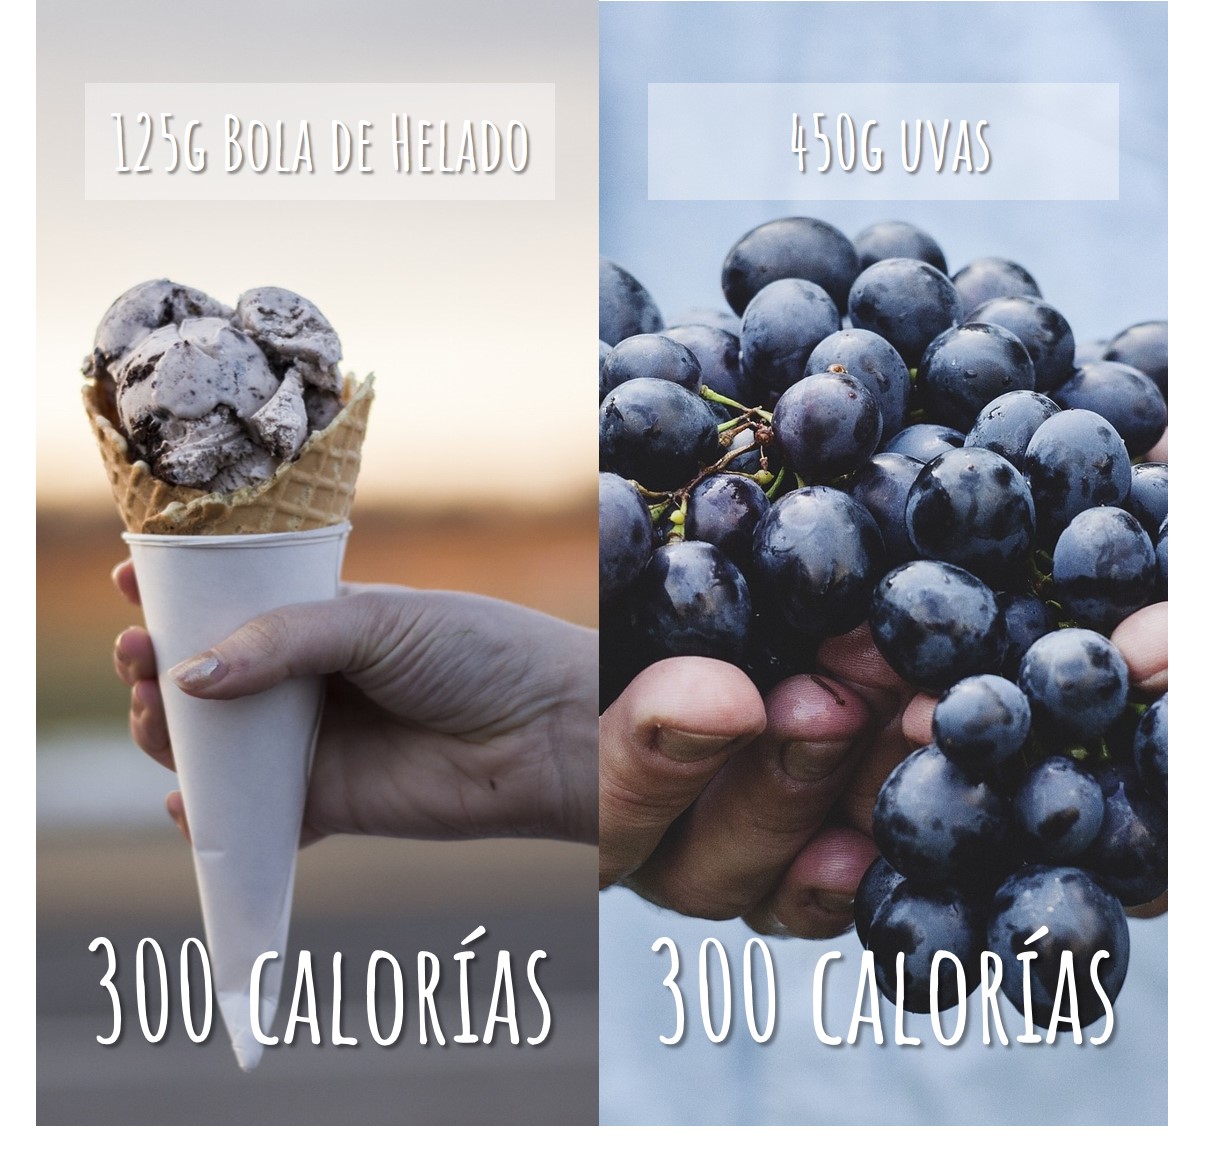 Pigmento Paquete o empaquetar garrapata Calorias – helado vs uvas – contar calorias – Mejor Real que Perfecto